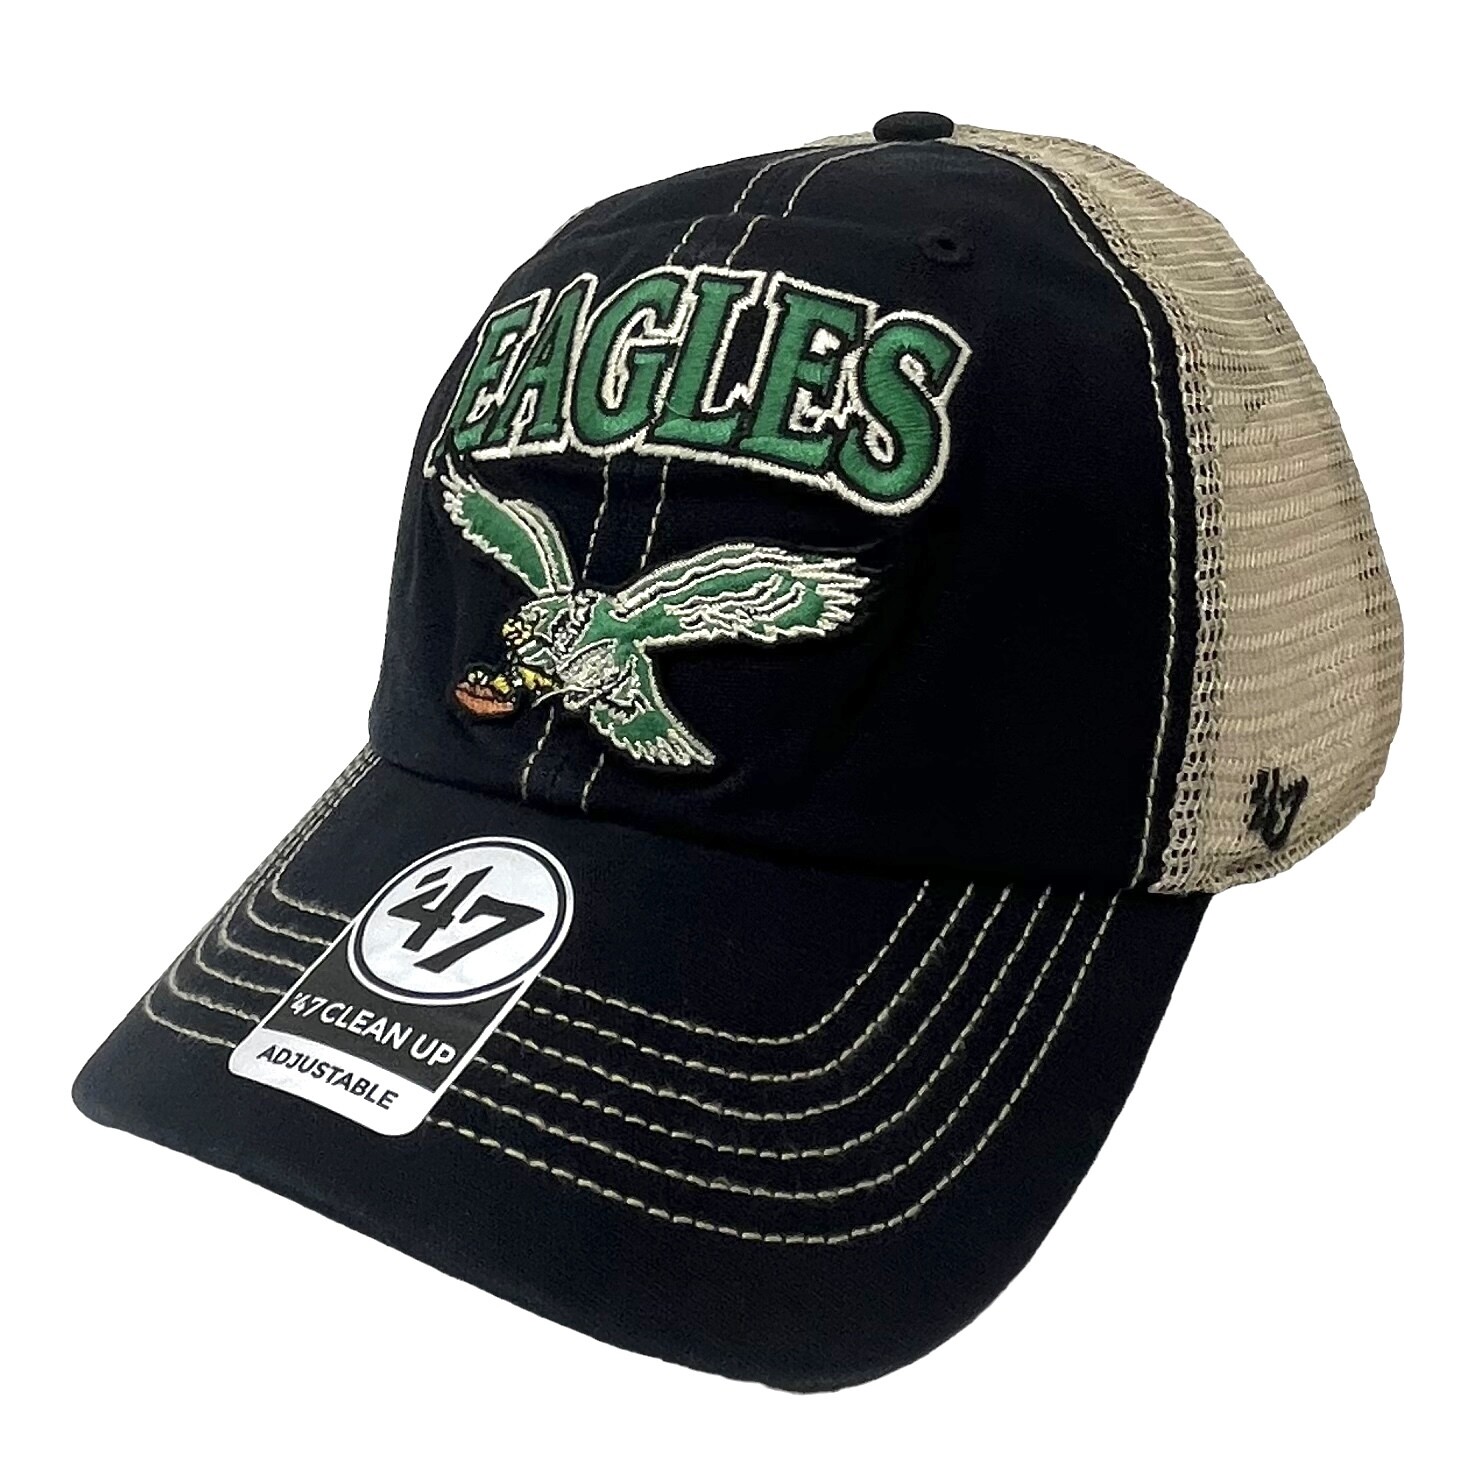 philadelphia eagles retro hat